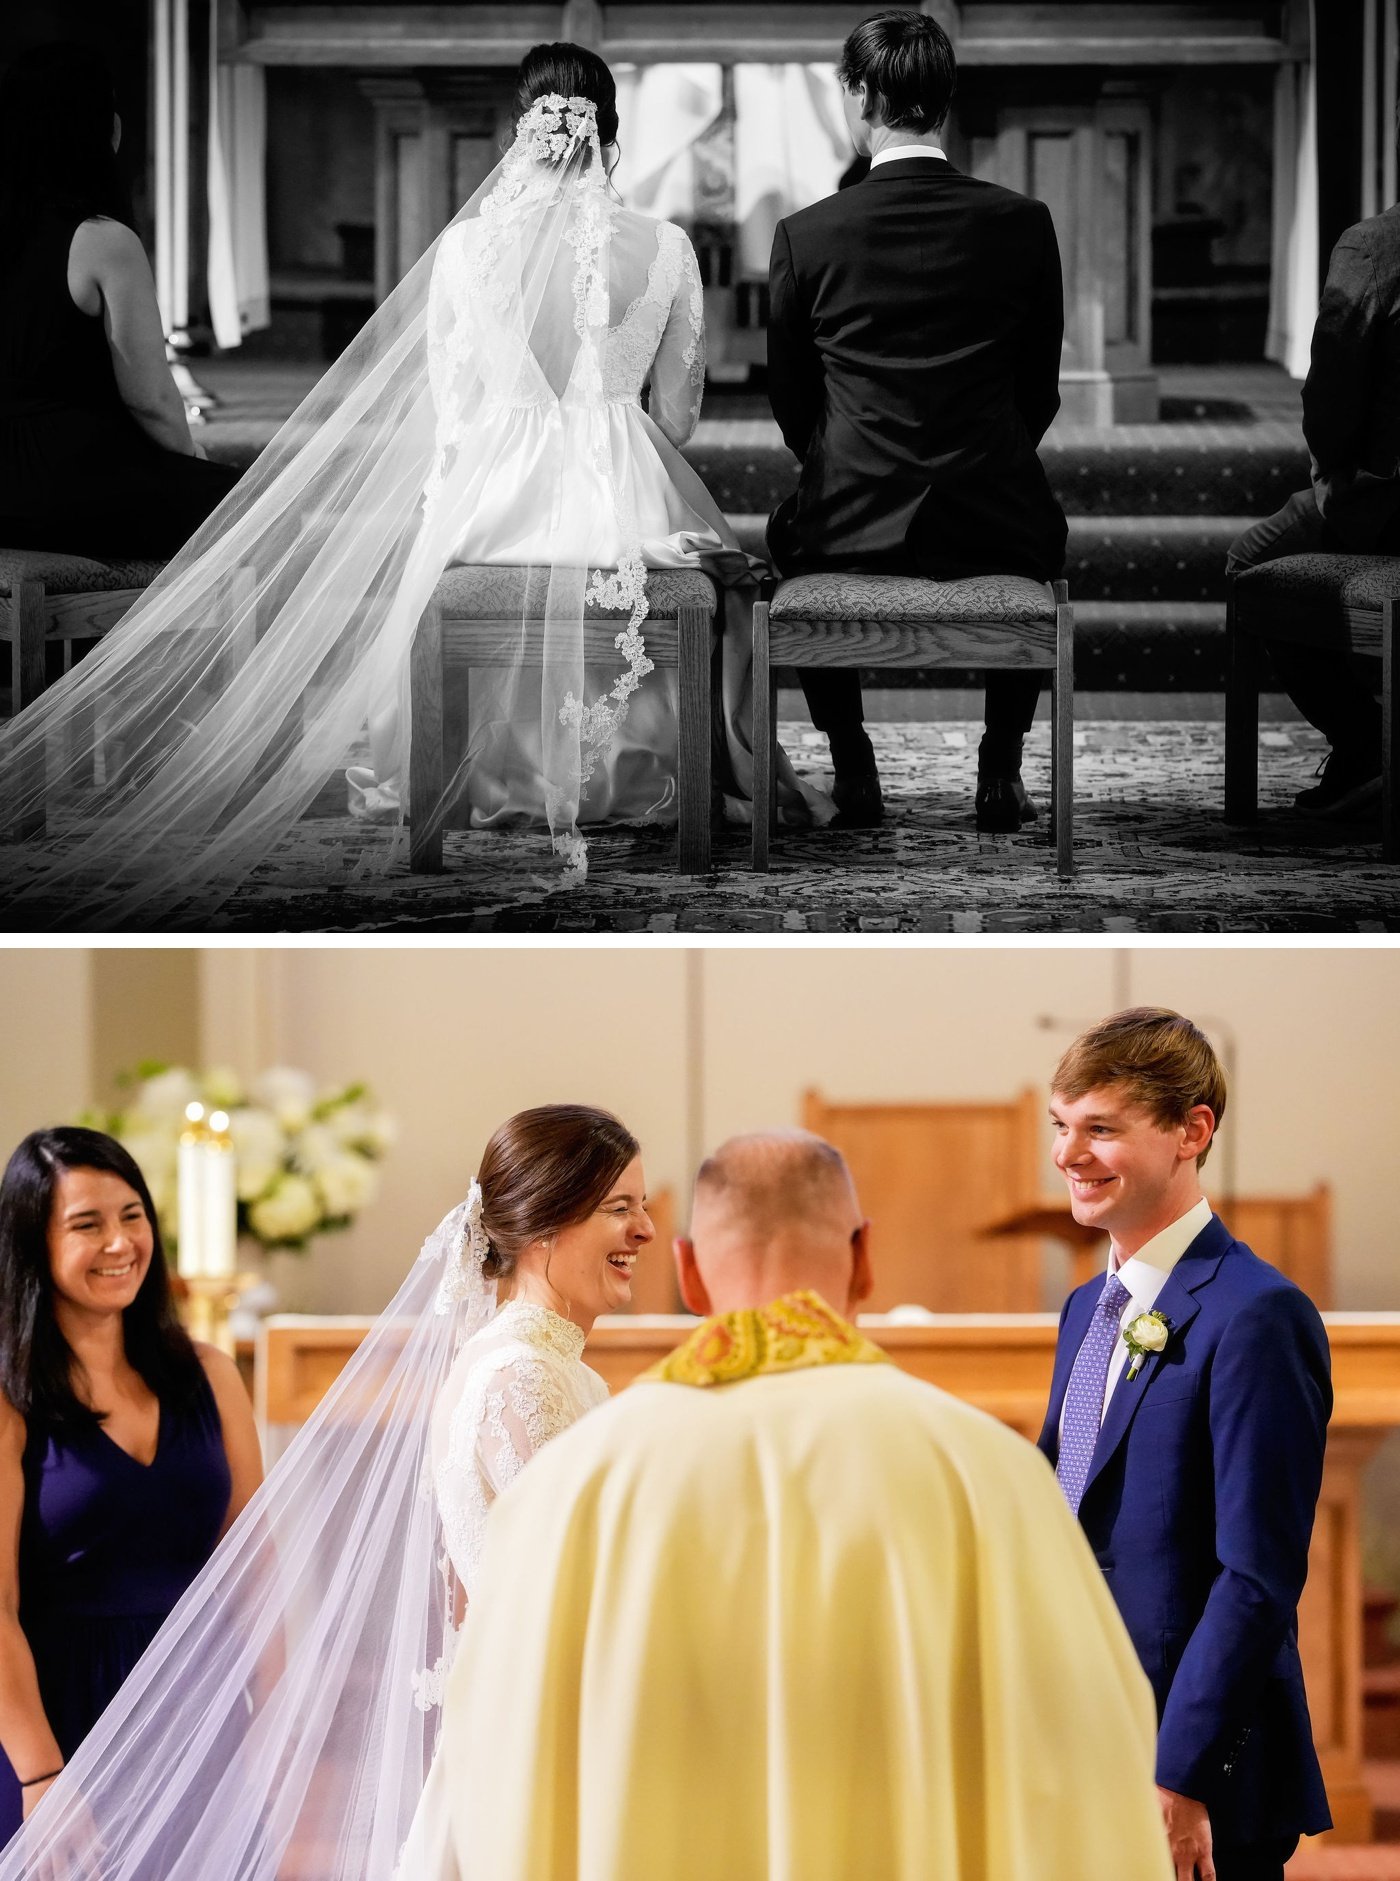 Intimate wedding mass at Holy Trinity Catholic Church in Harwich, MA